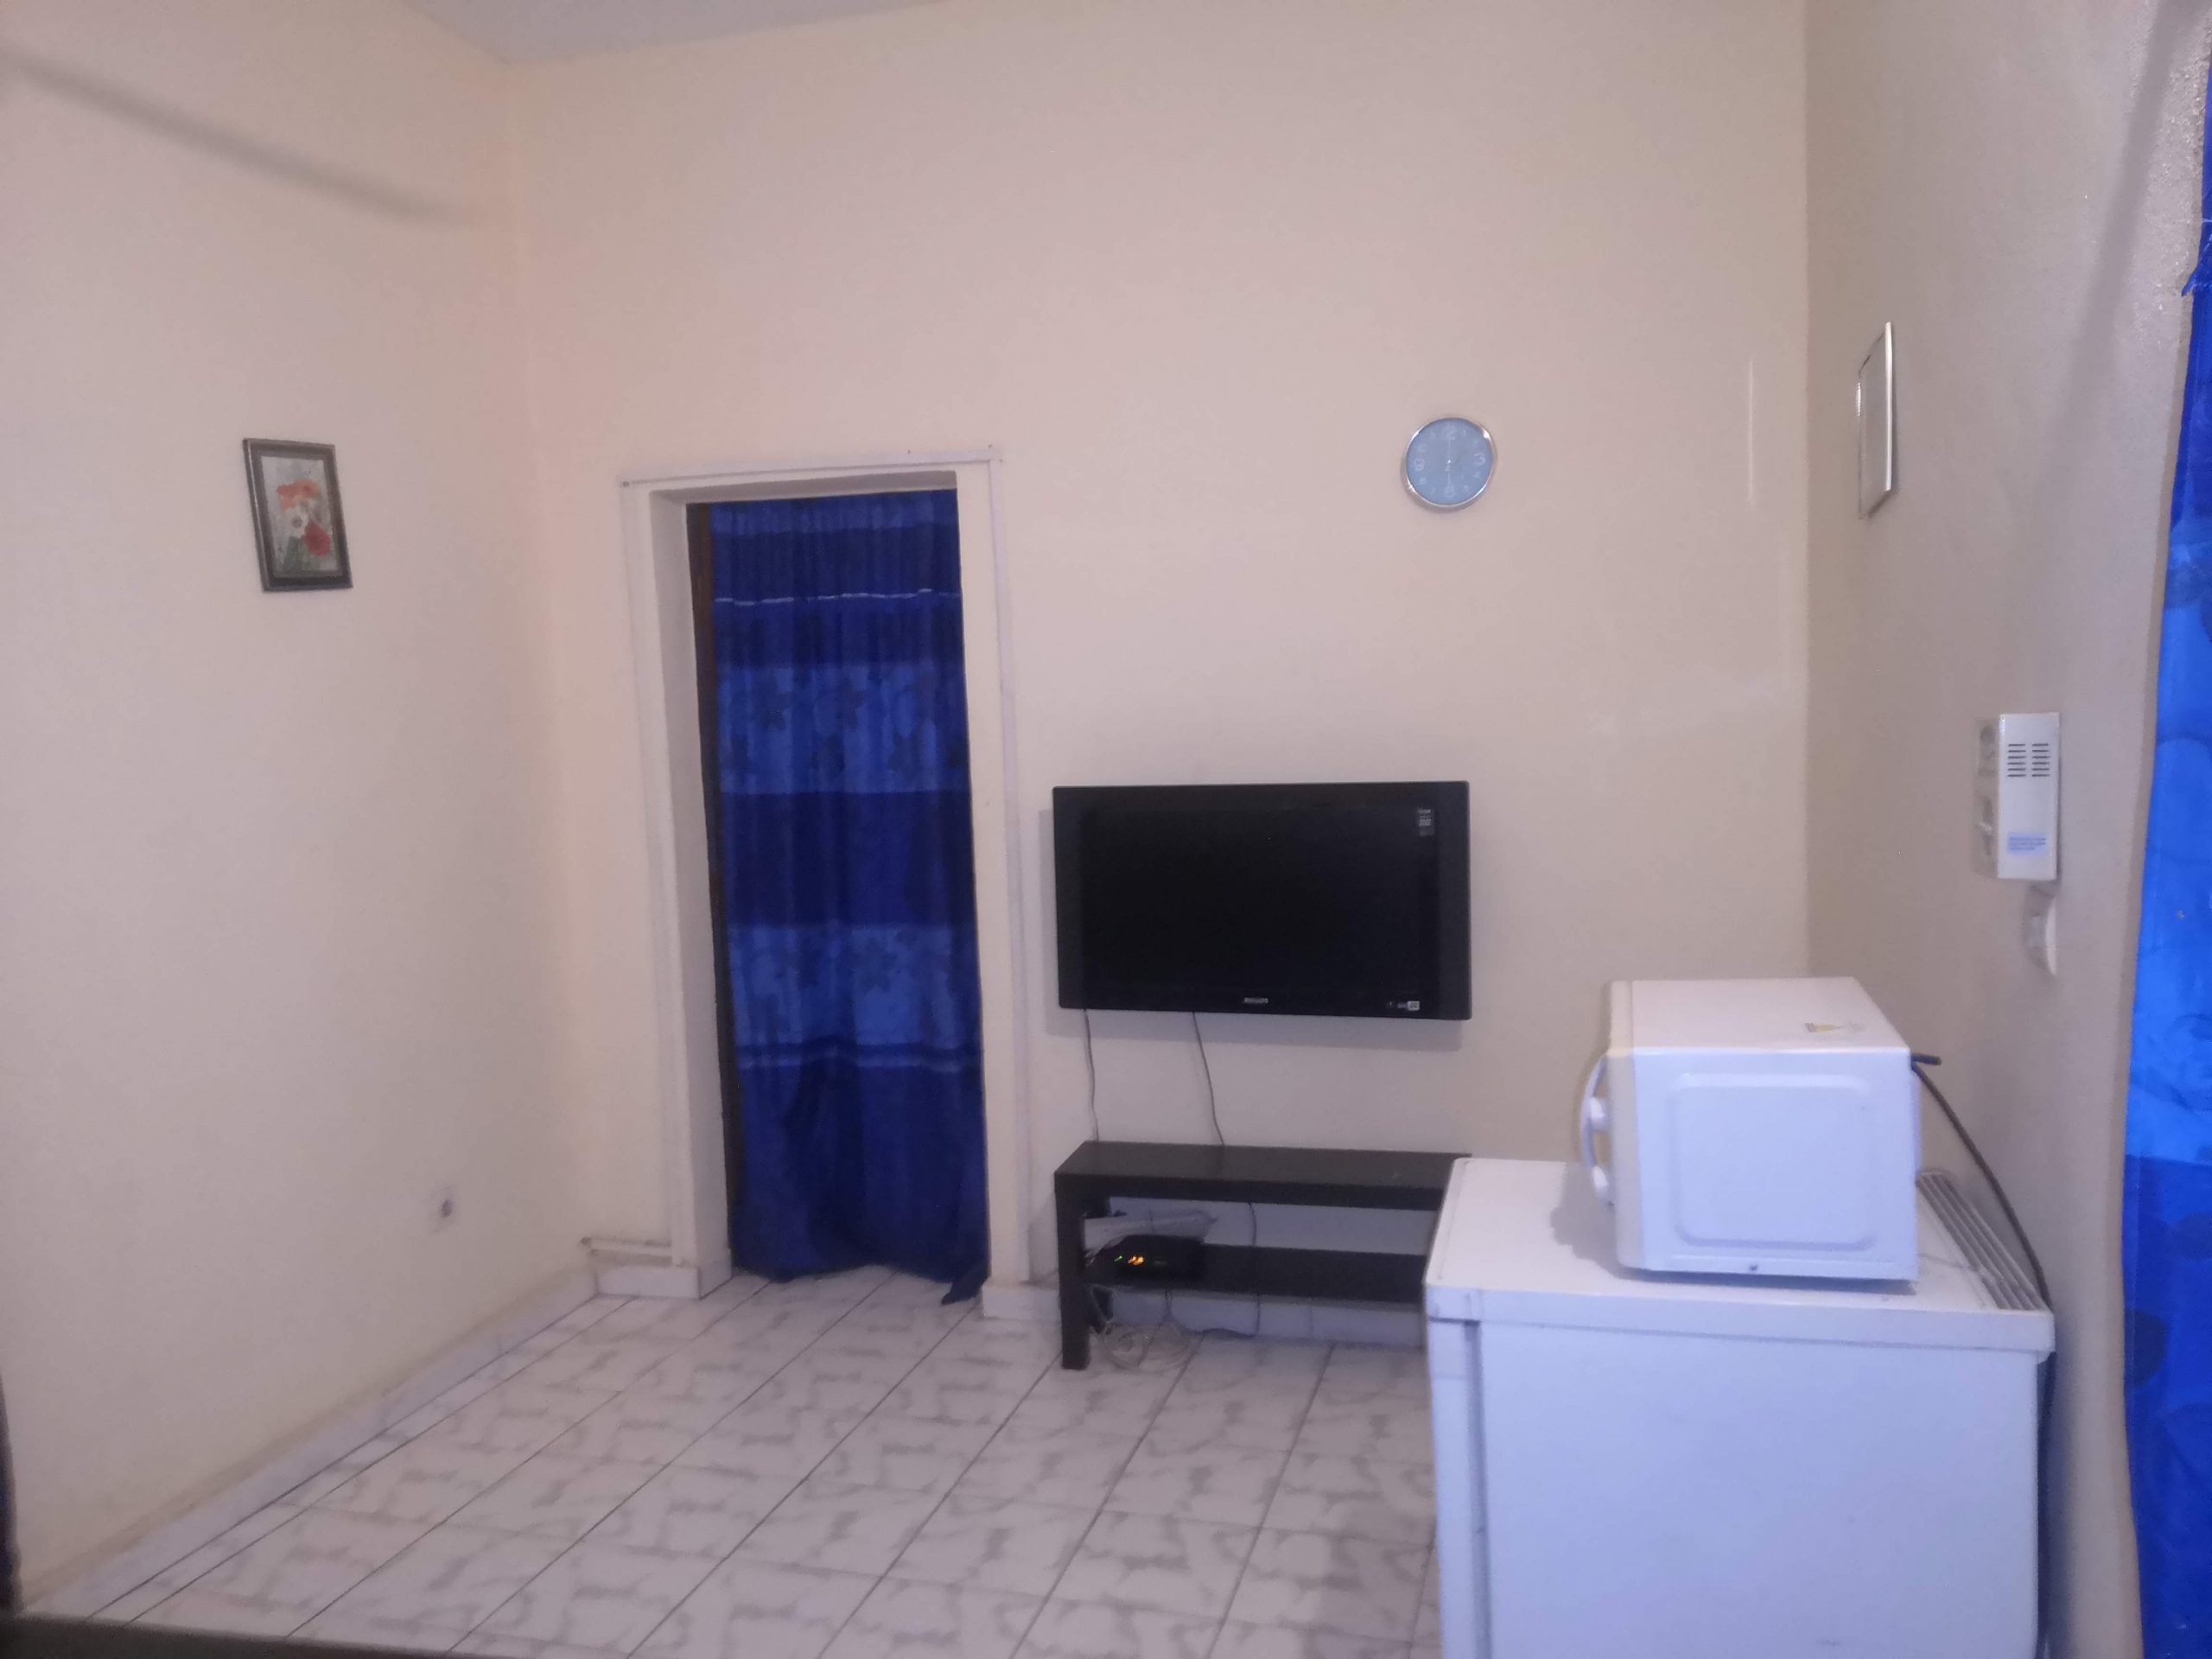 Appartement meublé a louer a Djikoroni Para (Bamako) climatisé, eau chaude